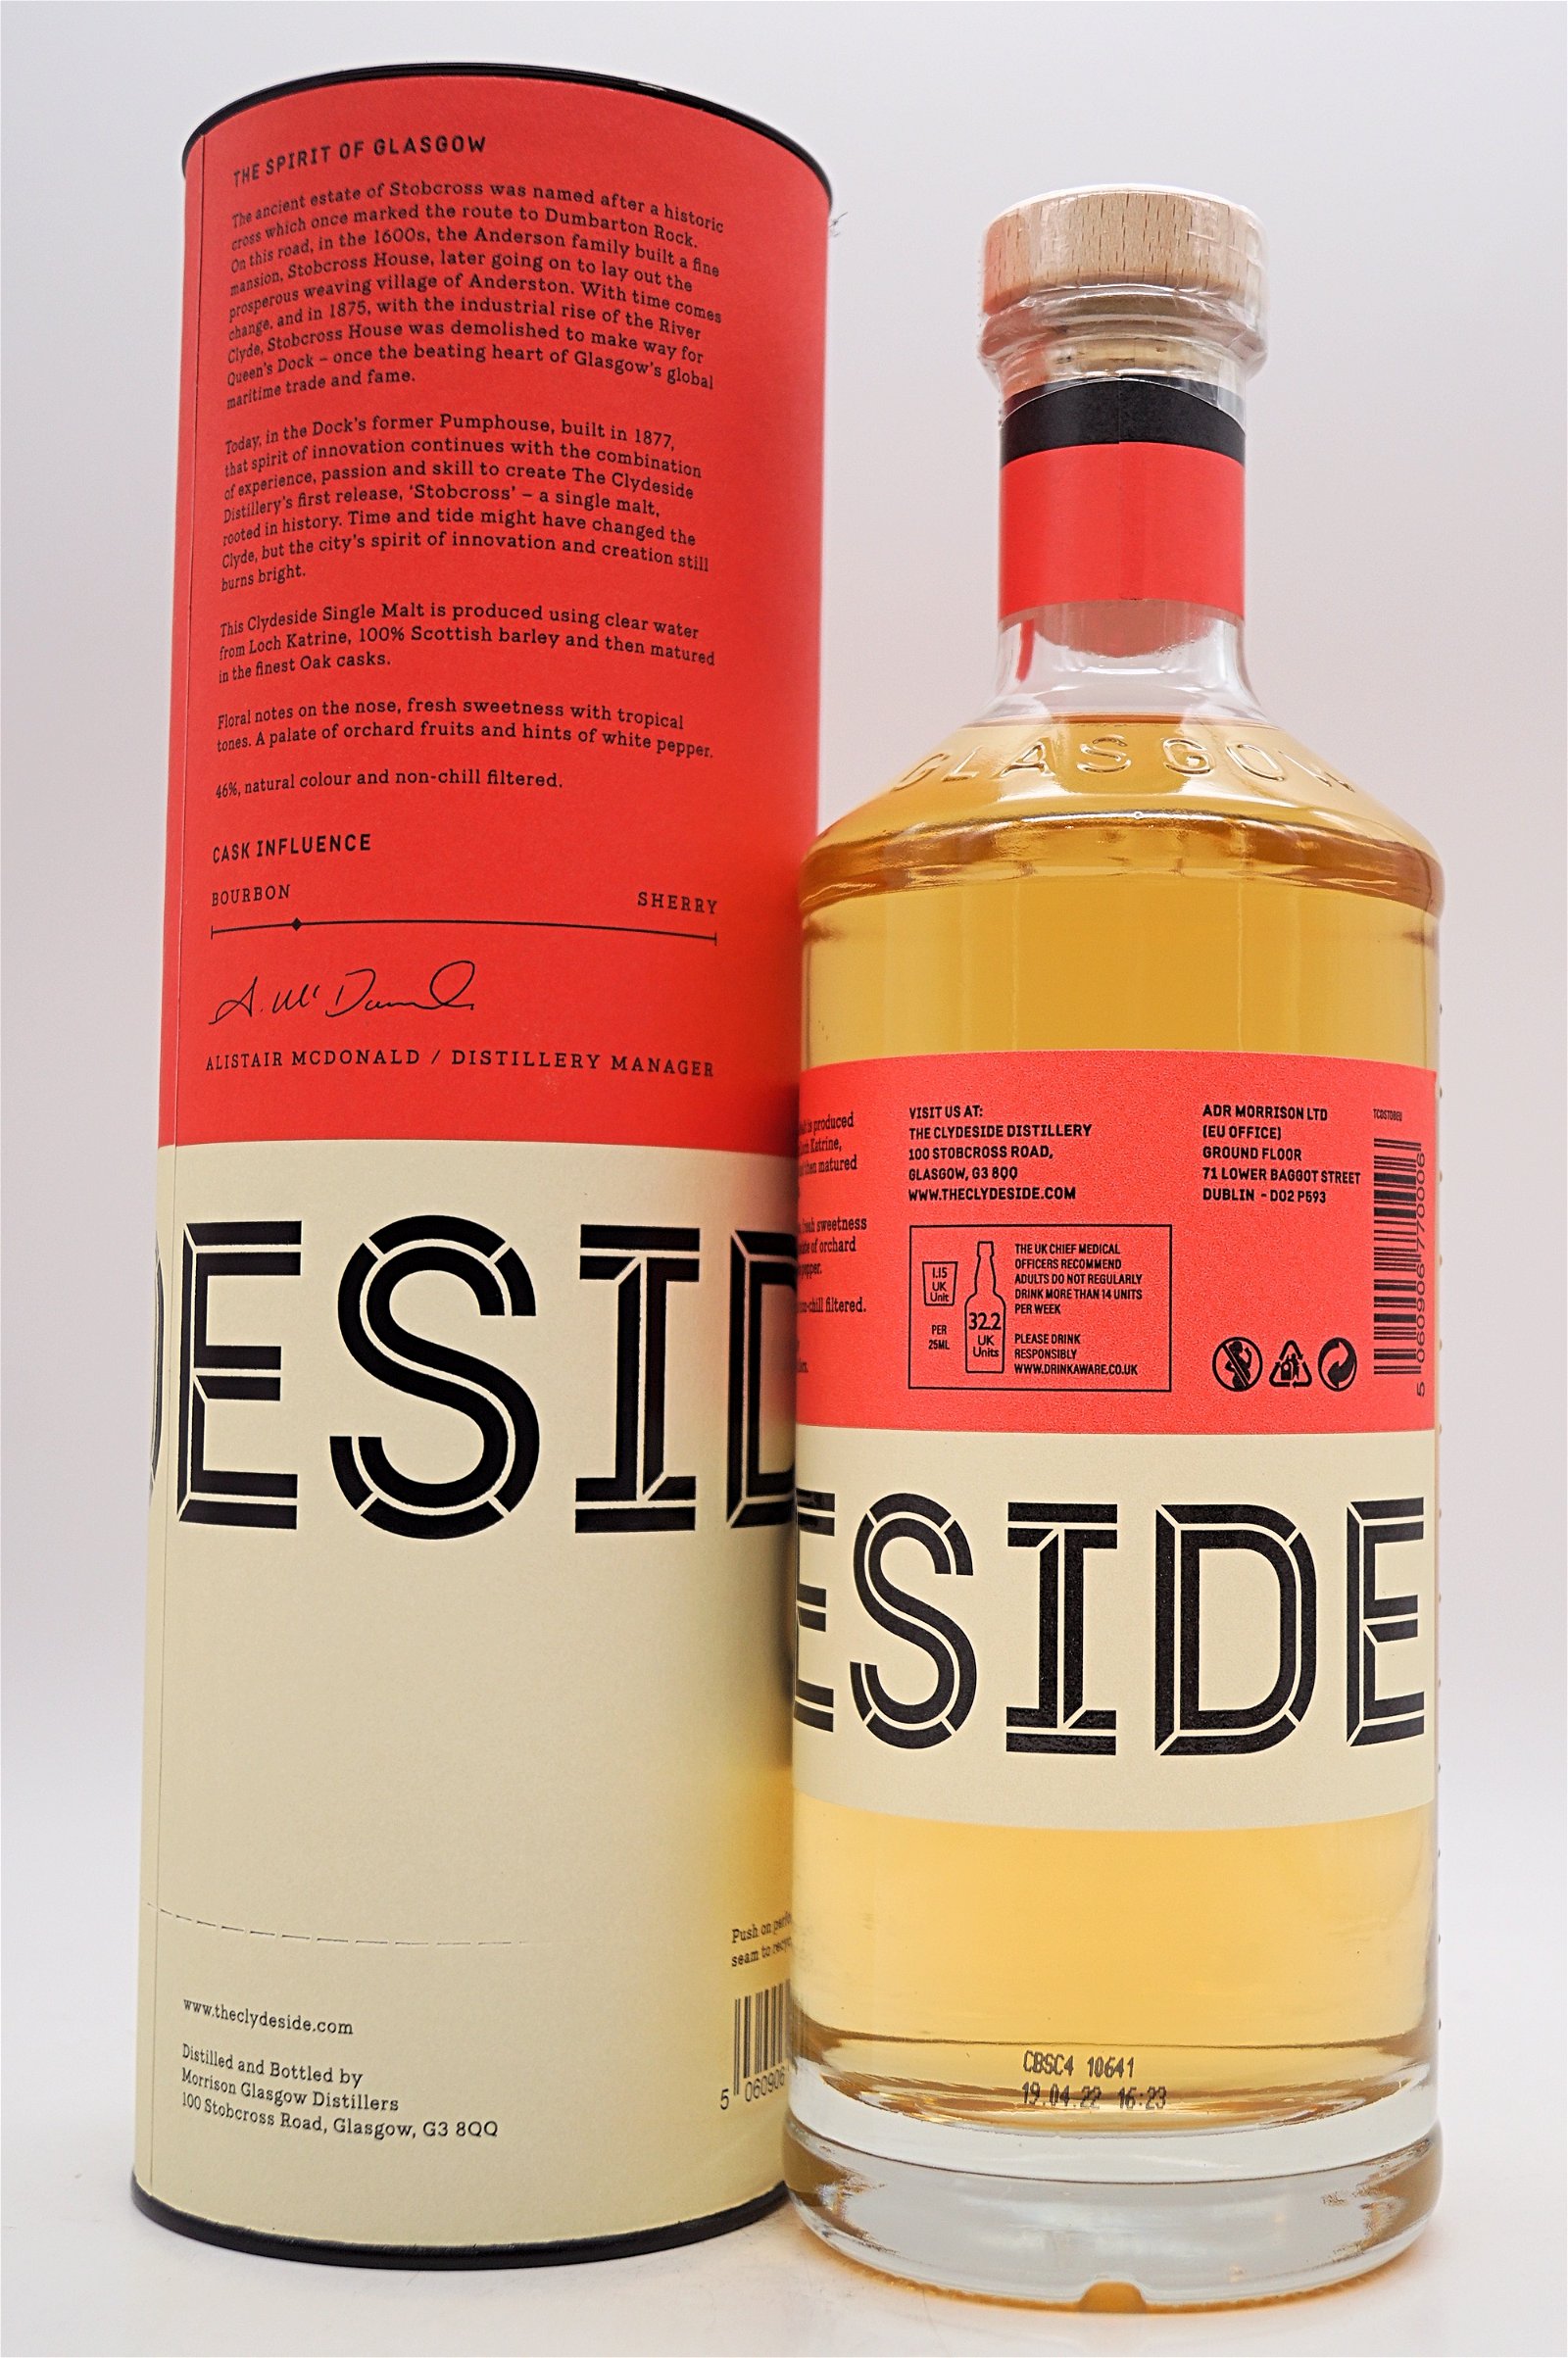 The Clydeside Stobcross Lowland Single Malt Scotch Whisky